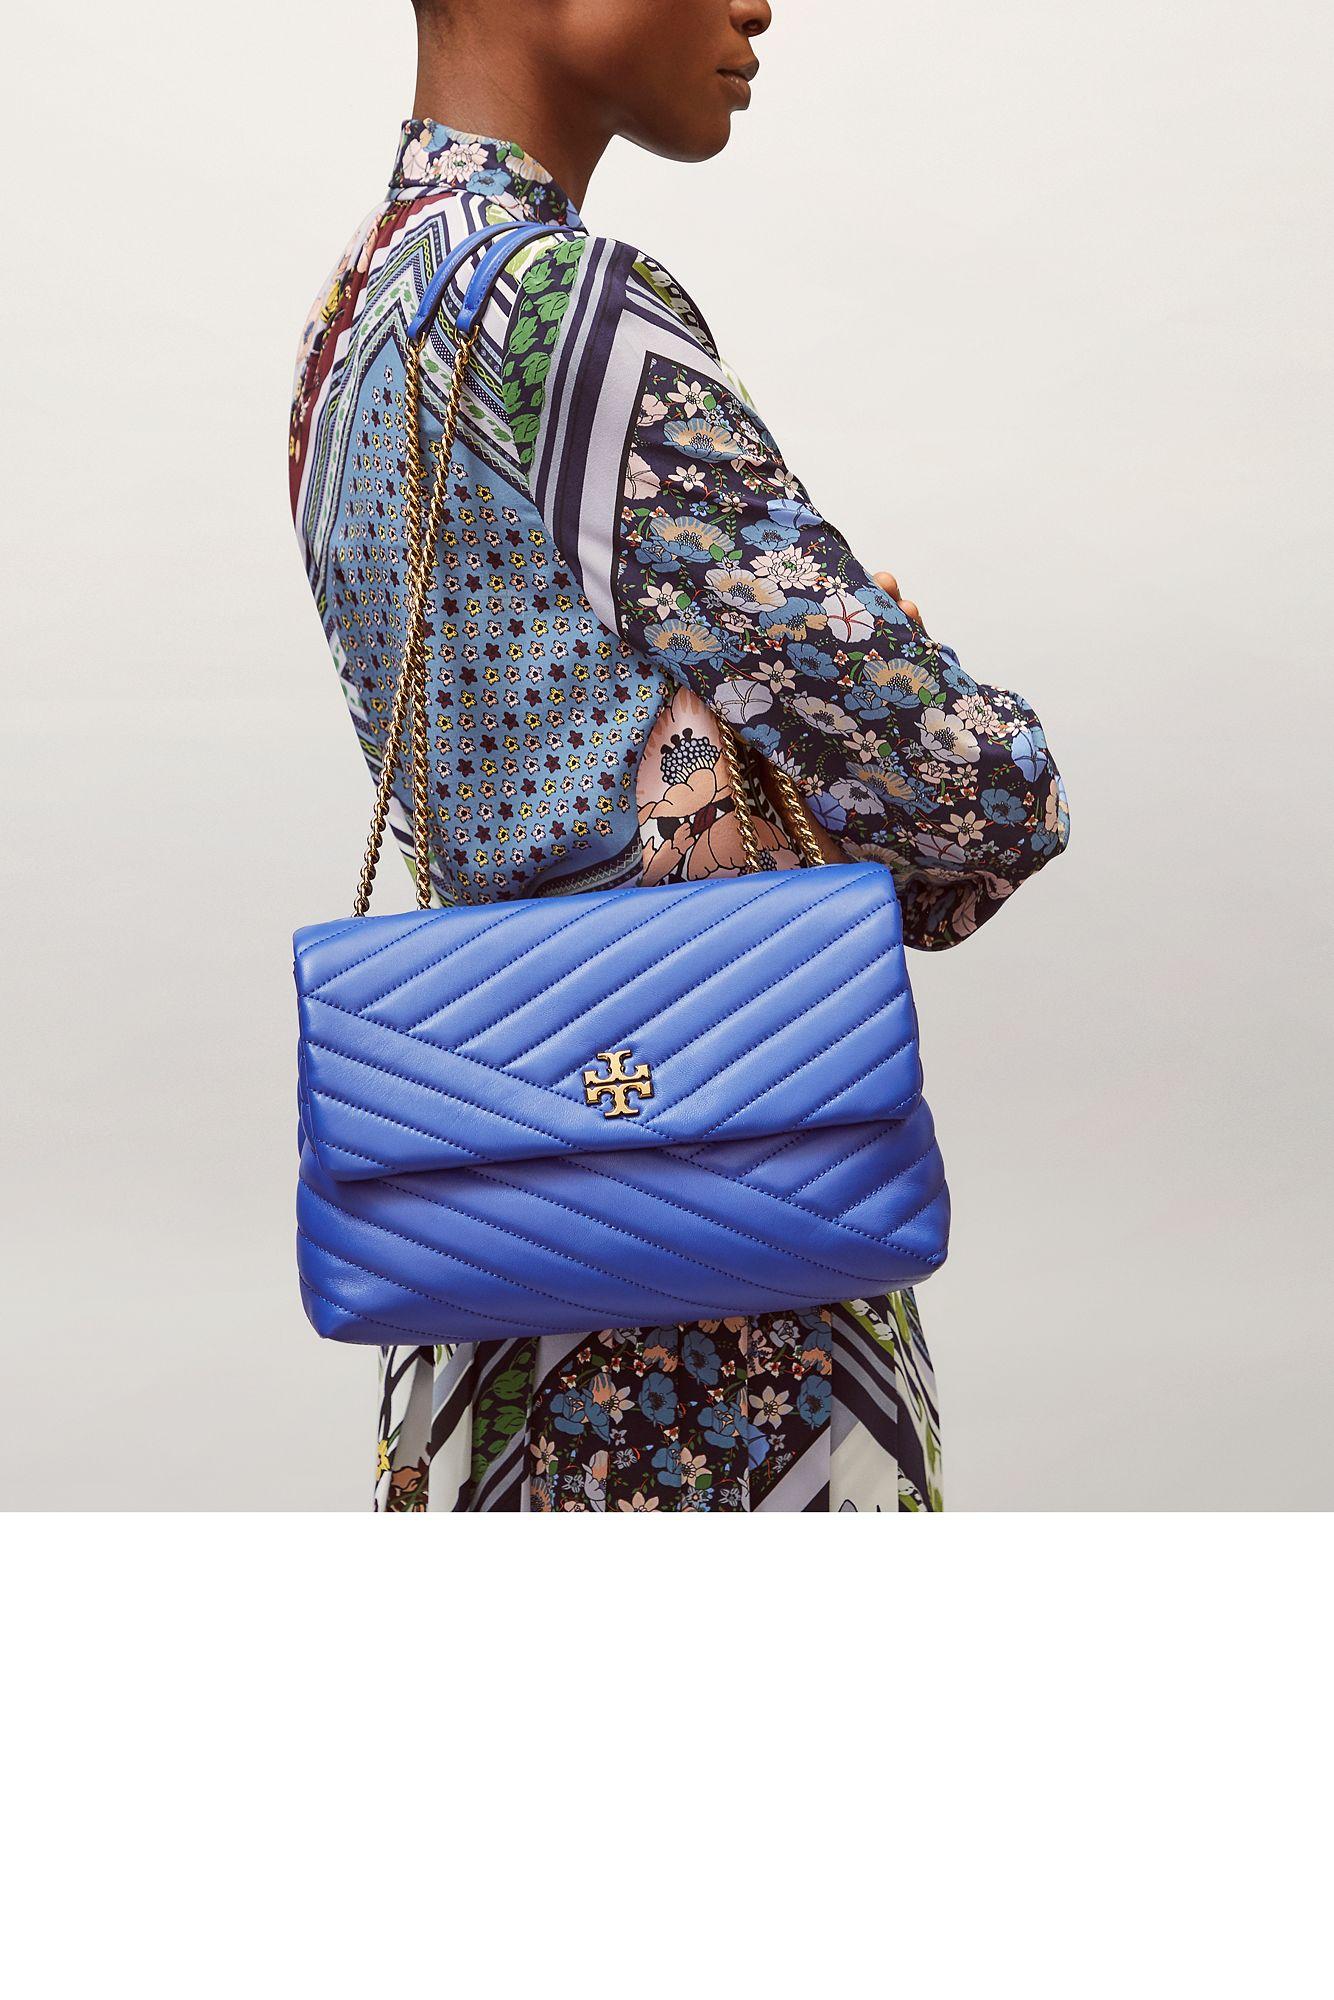 Tory Burch Kira Chevron Textured Small Convertible Shoulder Bag in Blue